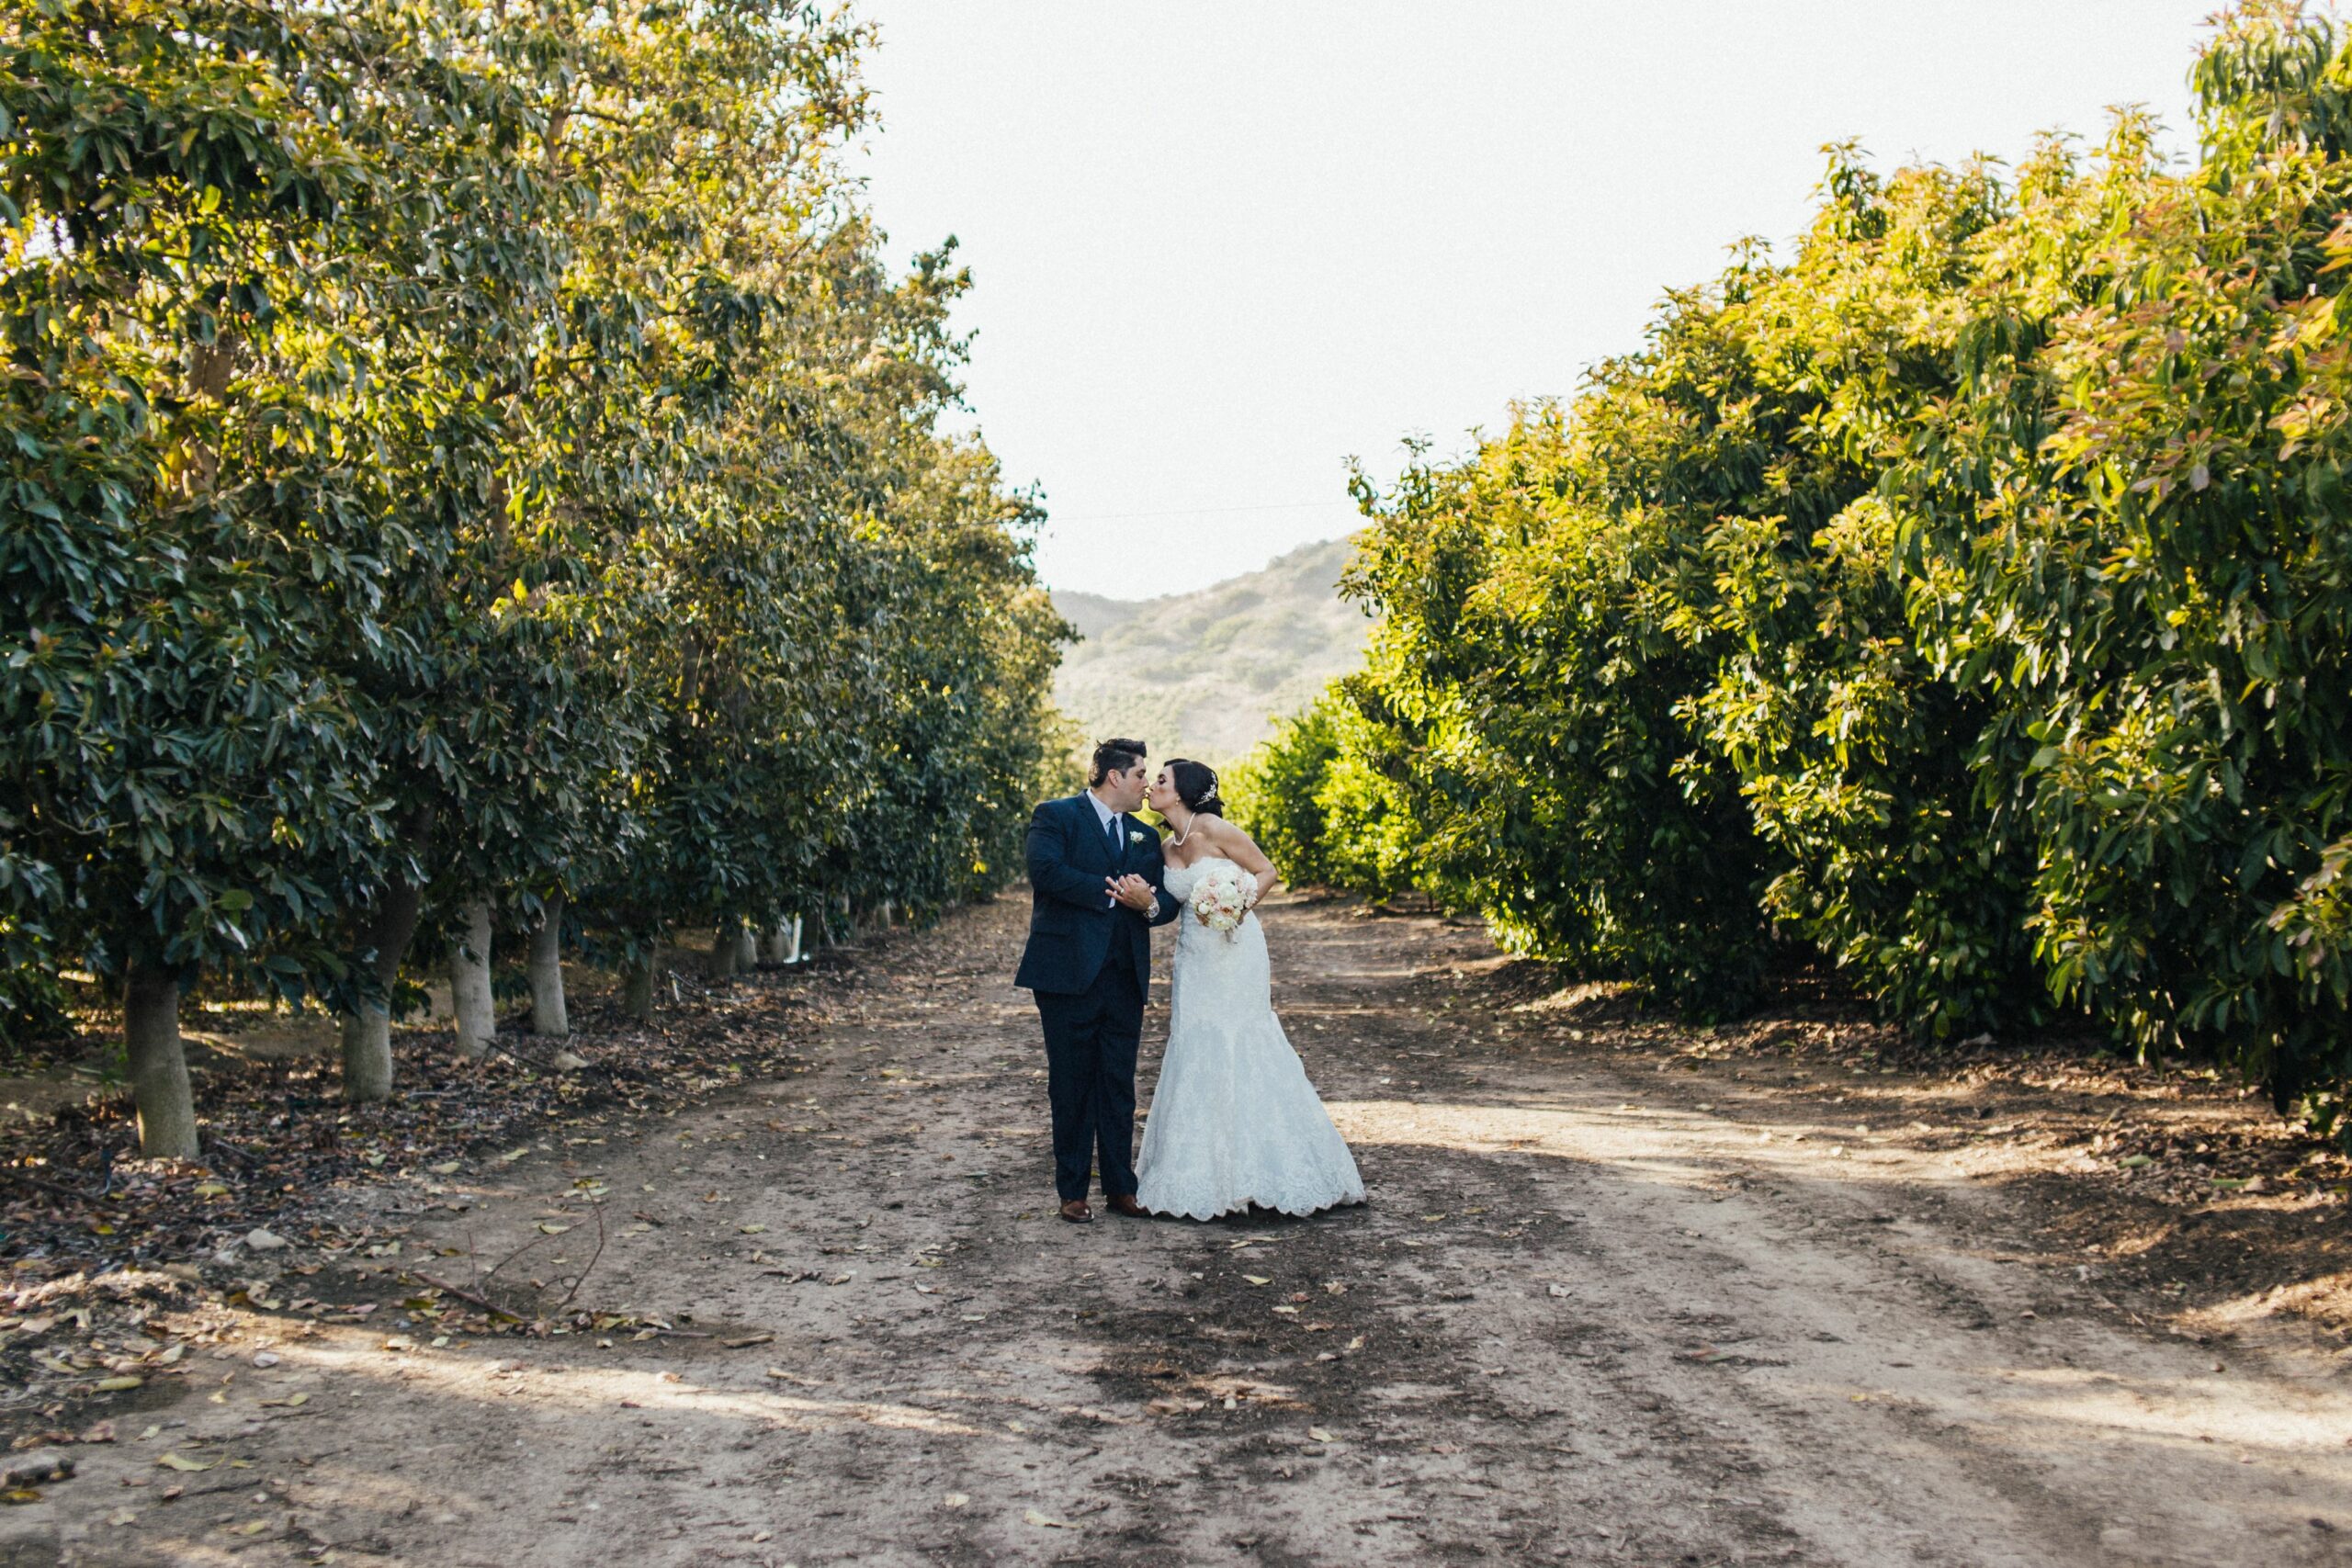 Limoneira Ranch, Cummings Road Santa Paula, CA - wedding photography in California - 3